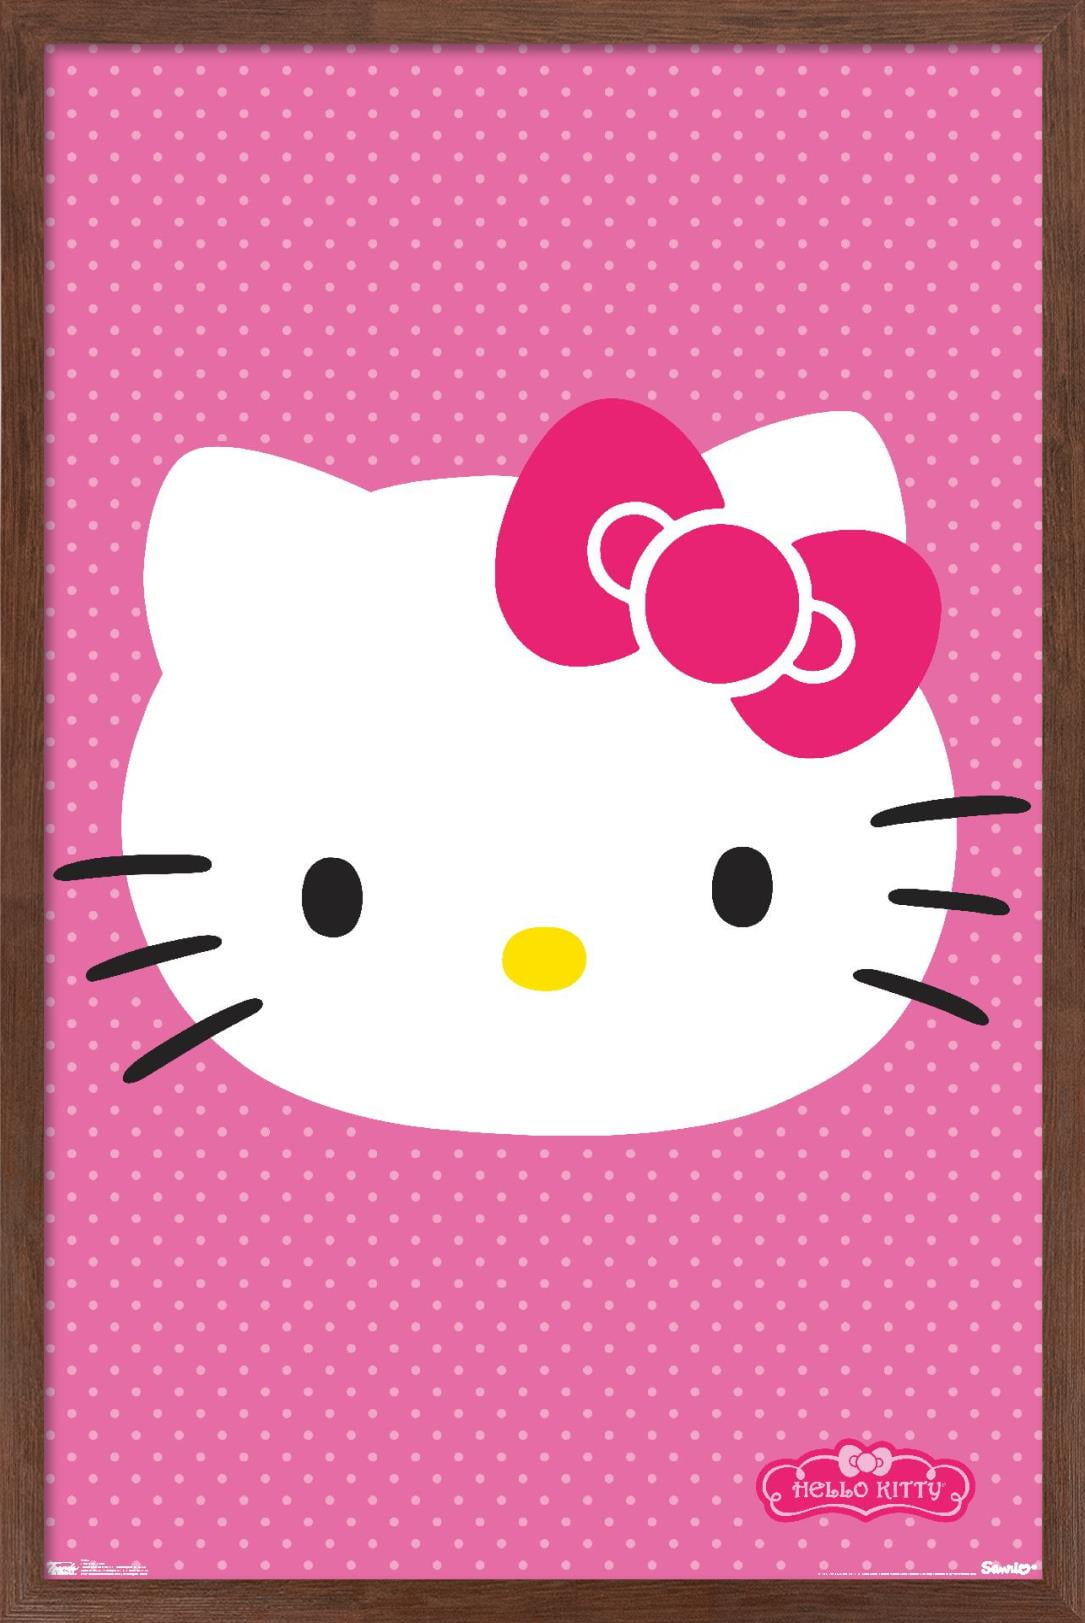 Hello Kitty - Bows Wall Poster, 22.375 inch x 34 inch, EBPOD14734PMEC